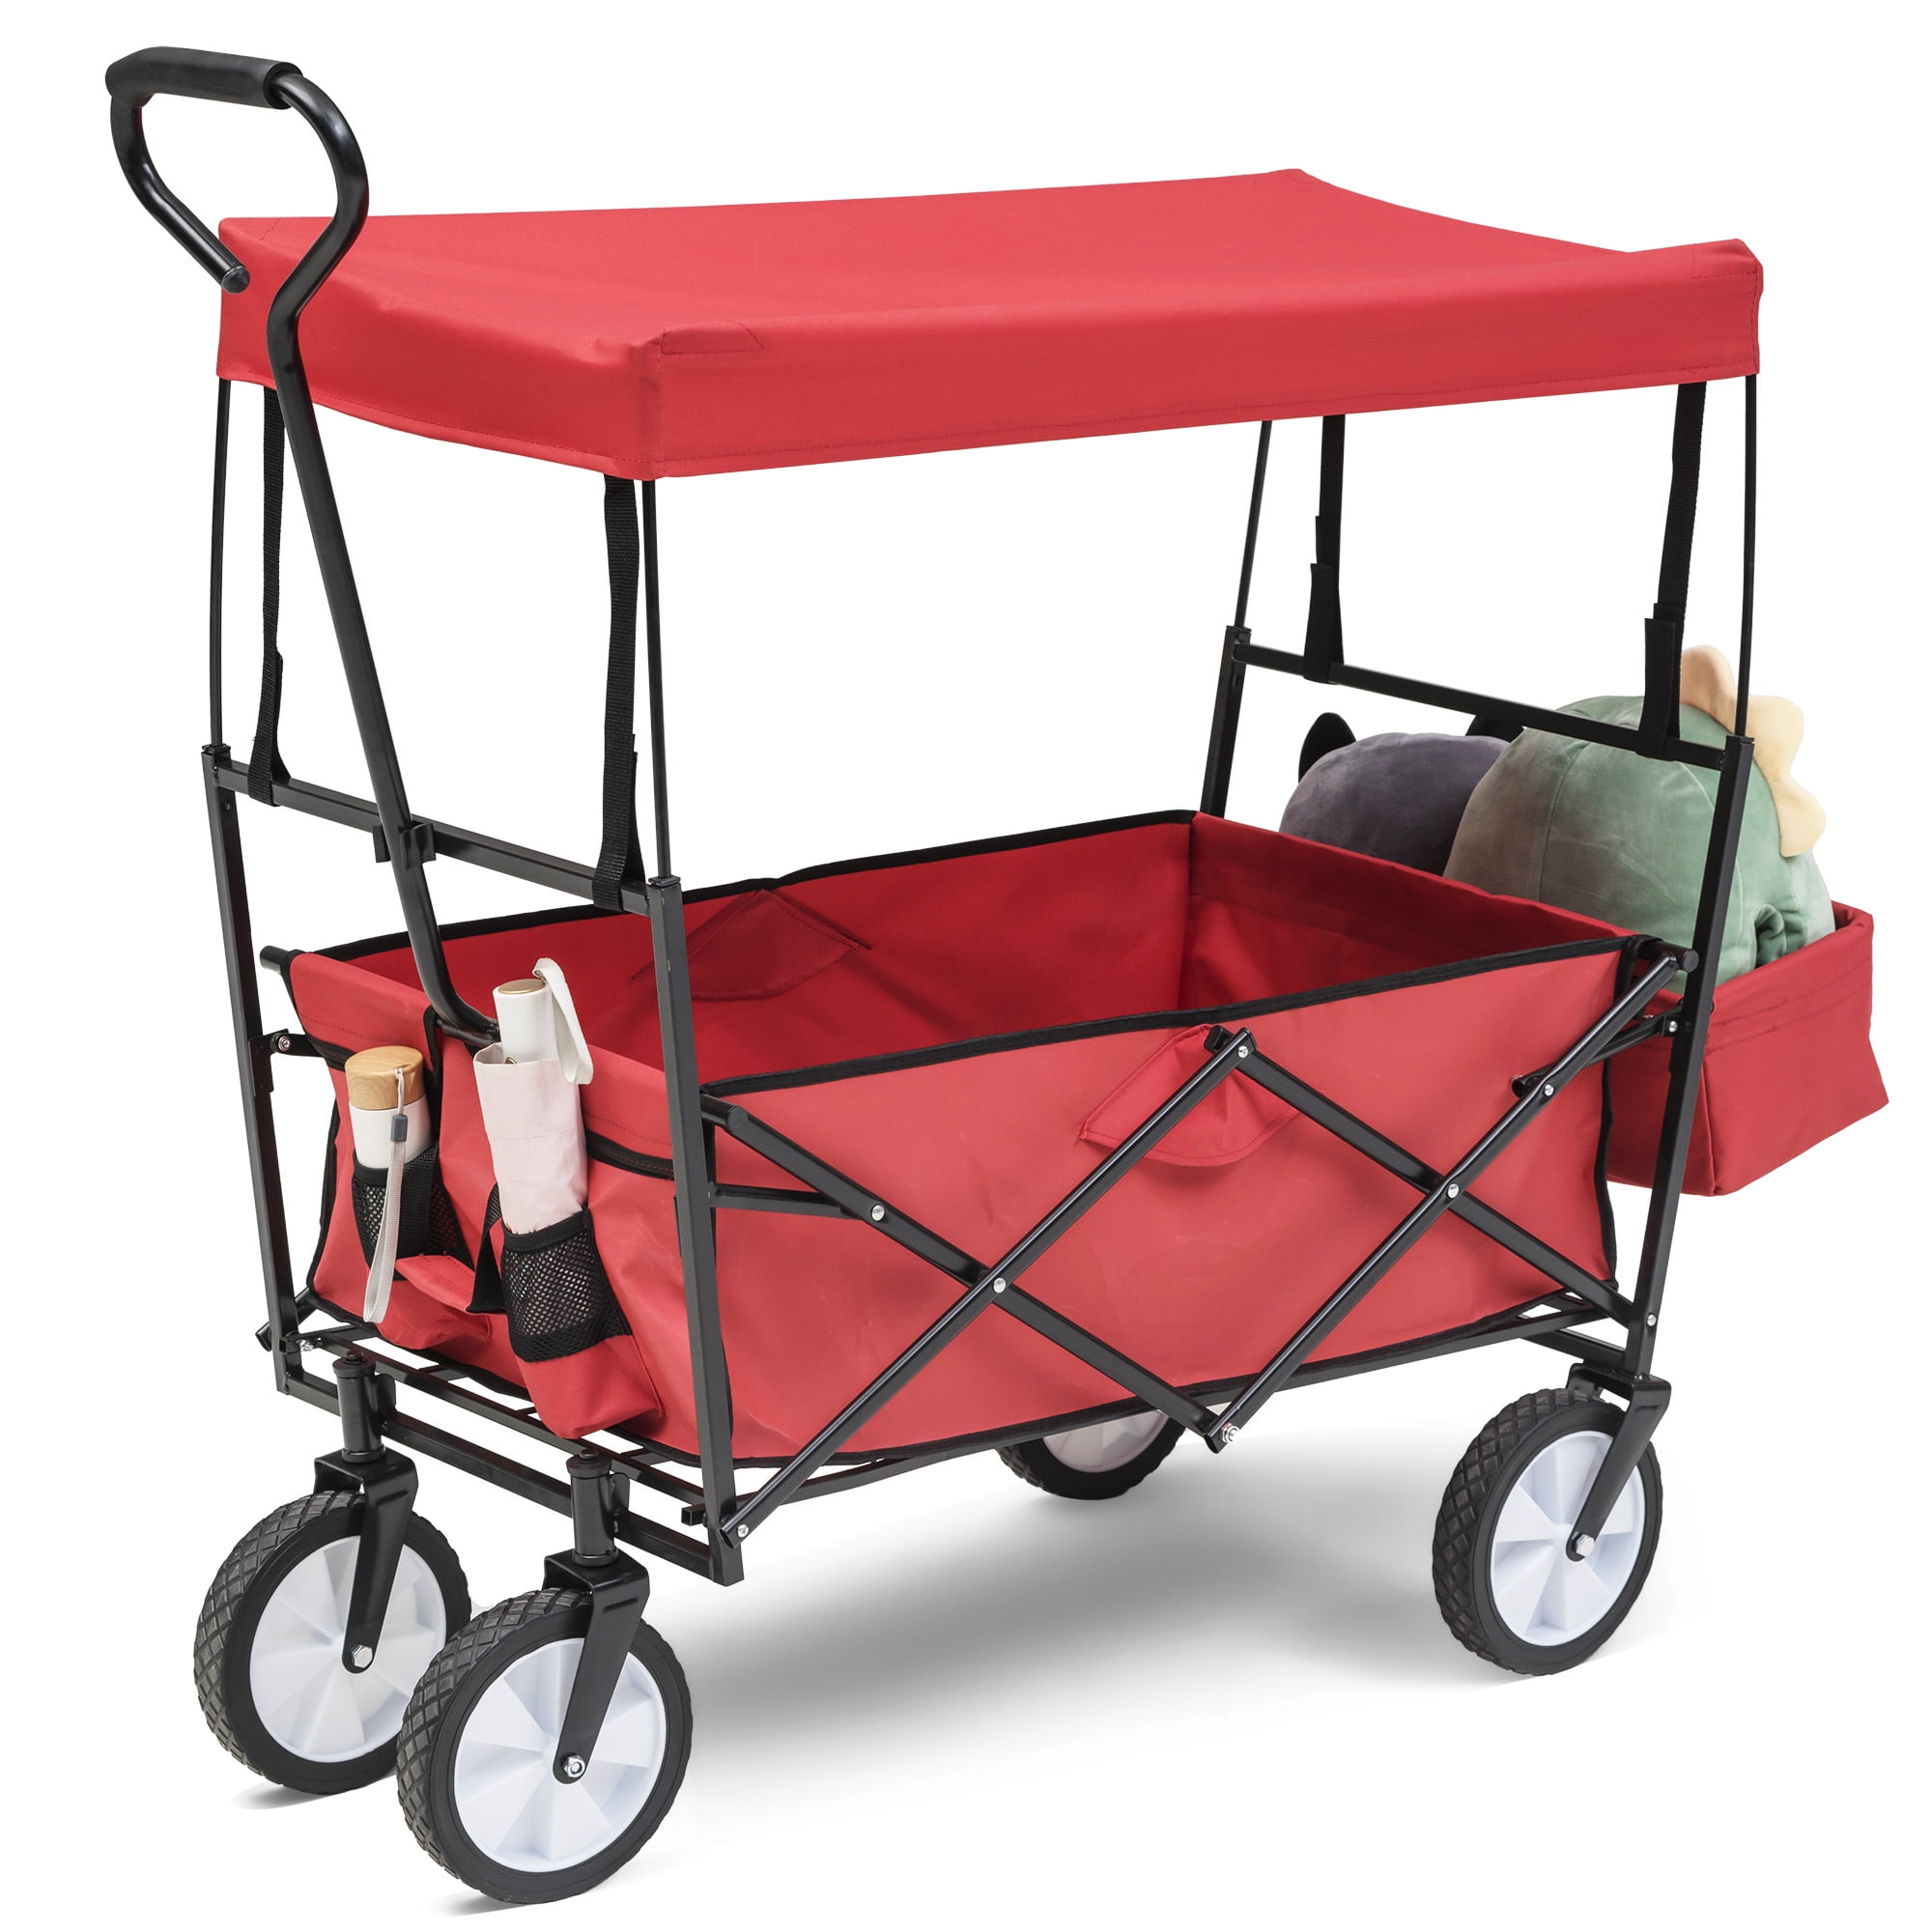 Heavy Duty Garden Cart for Shopping Beach Outdoors Blue femor Collapsible Folding Outdoor Utility Wagon 